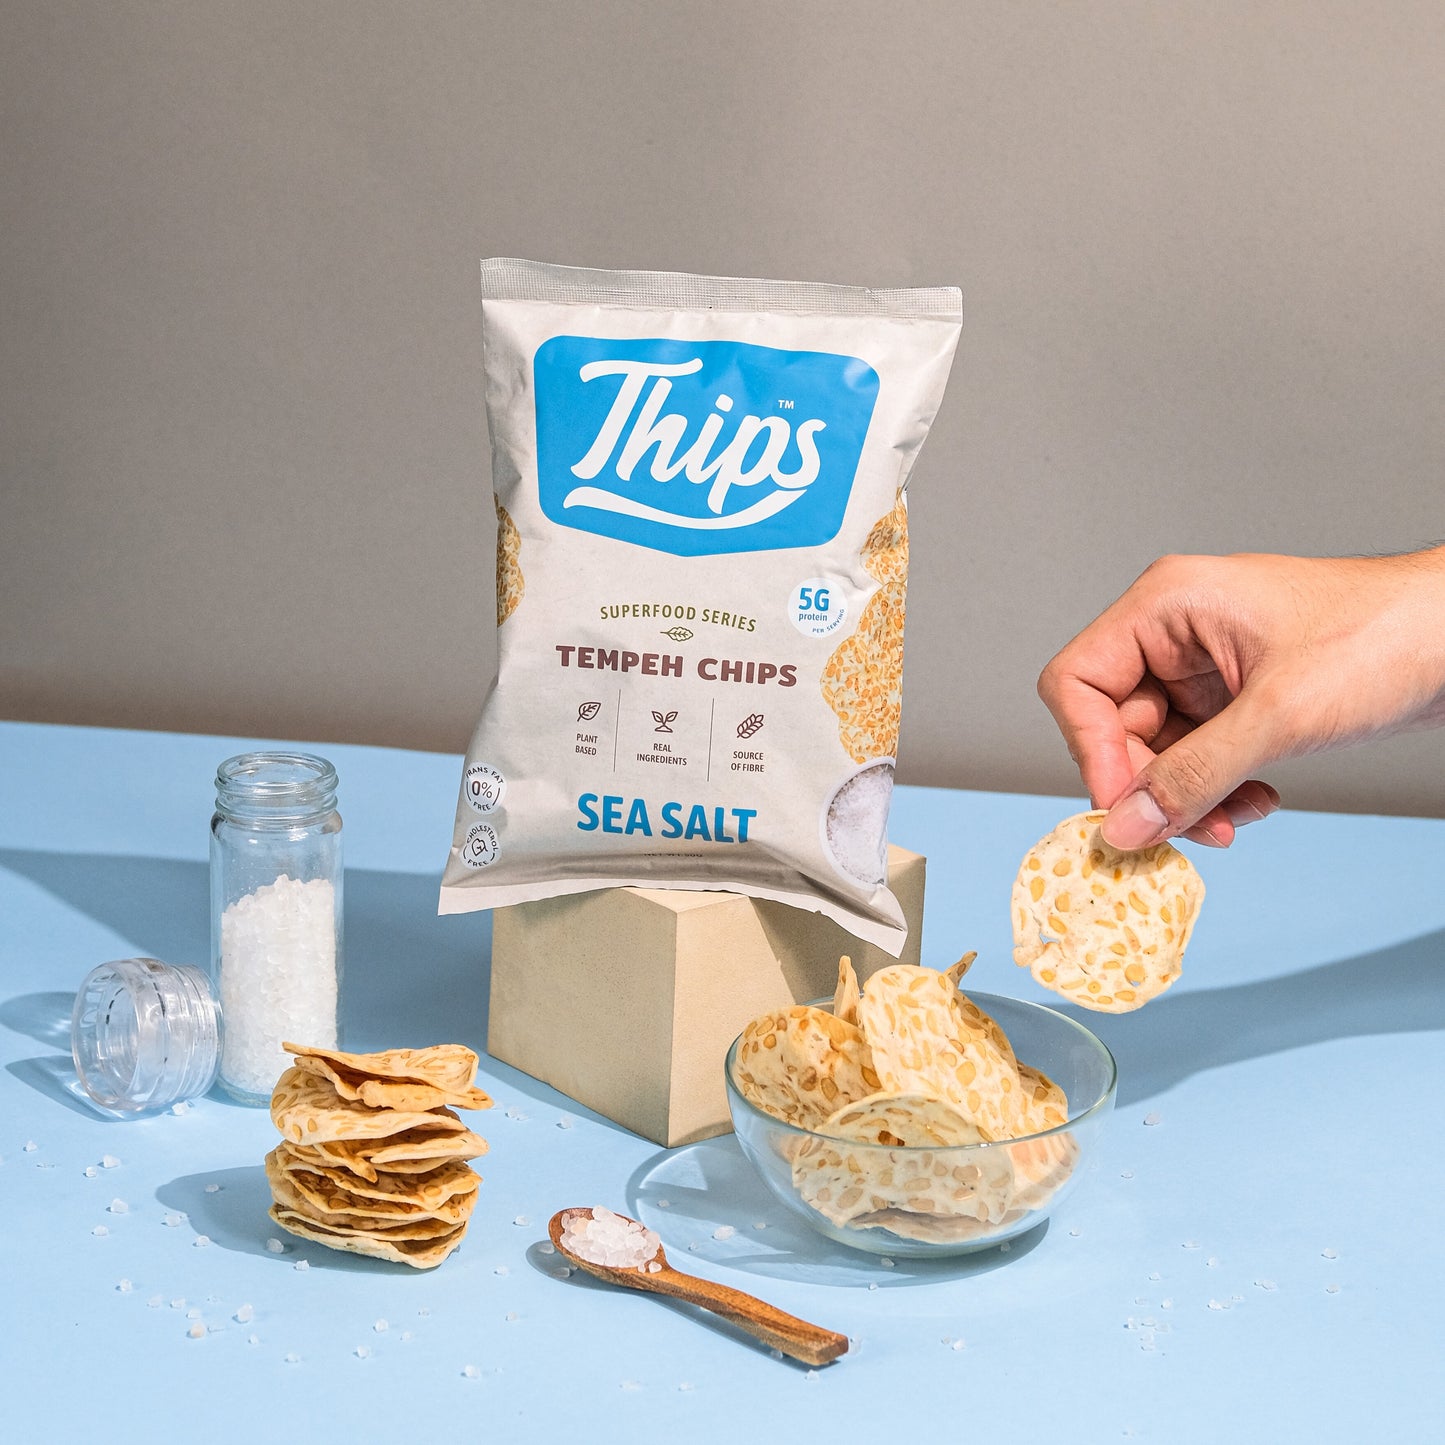 Thips Sea Salt Tempeh Chips (1 x 50g)